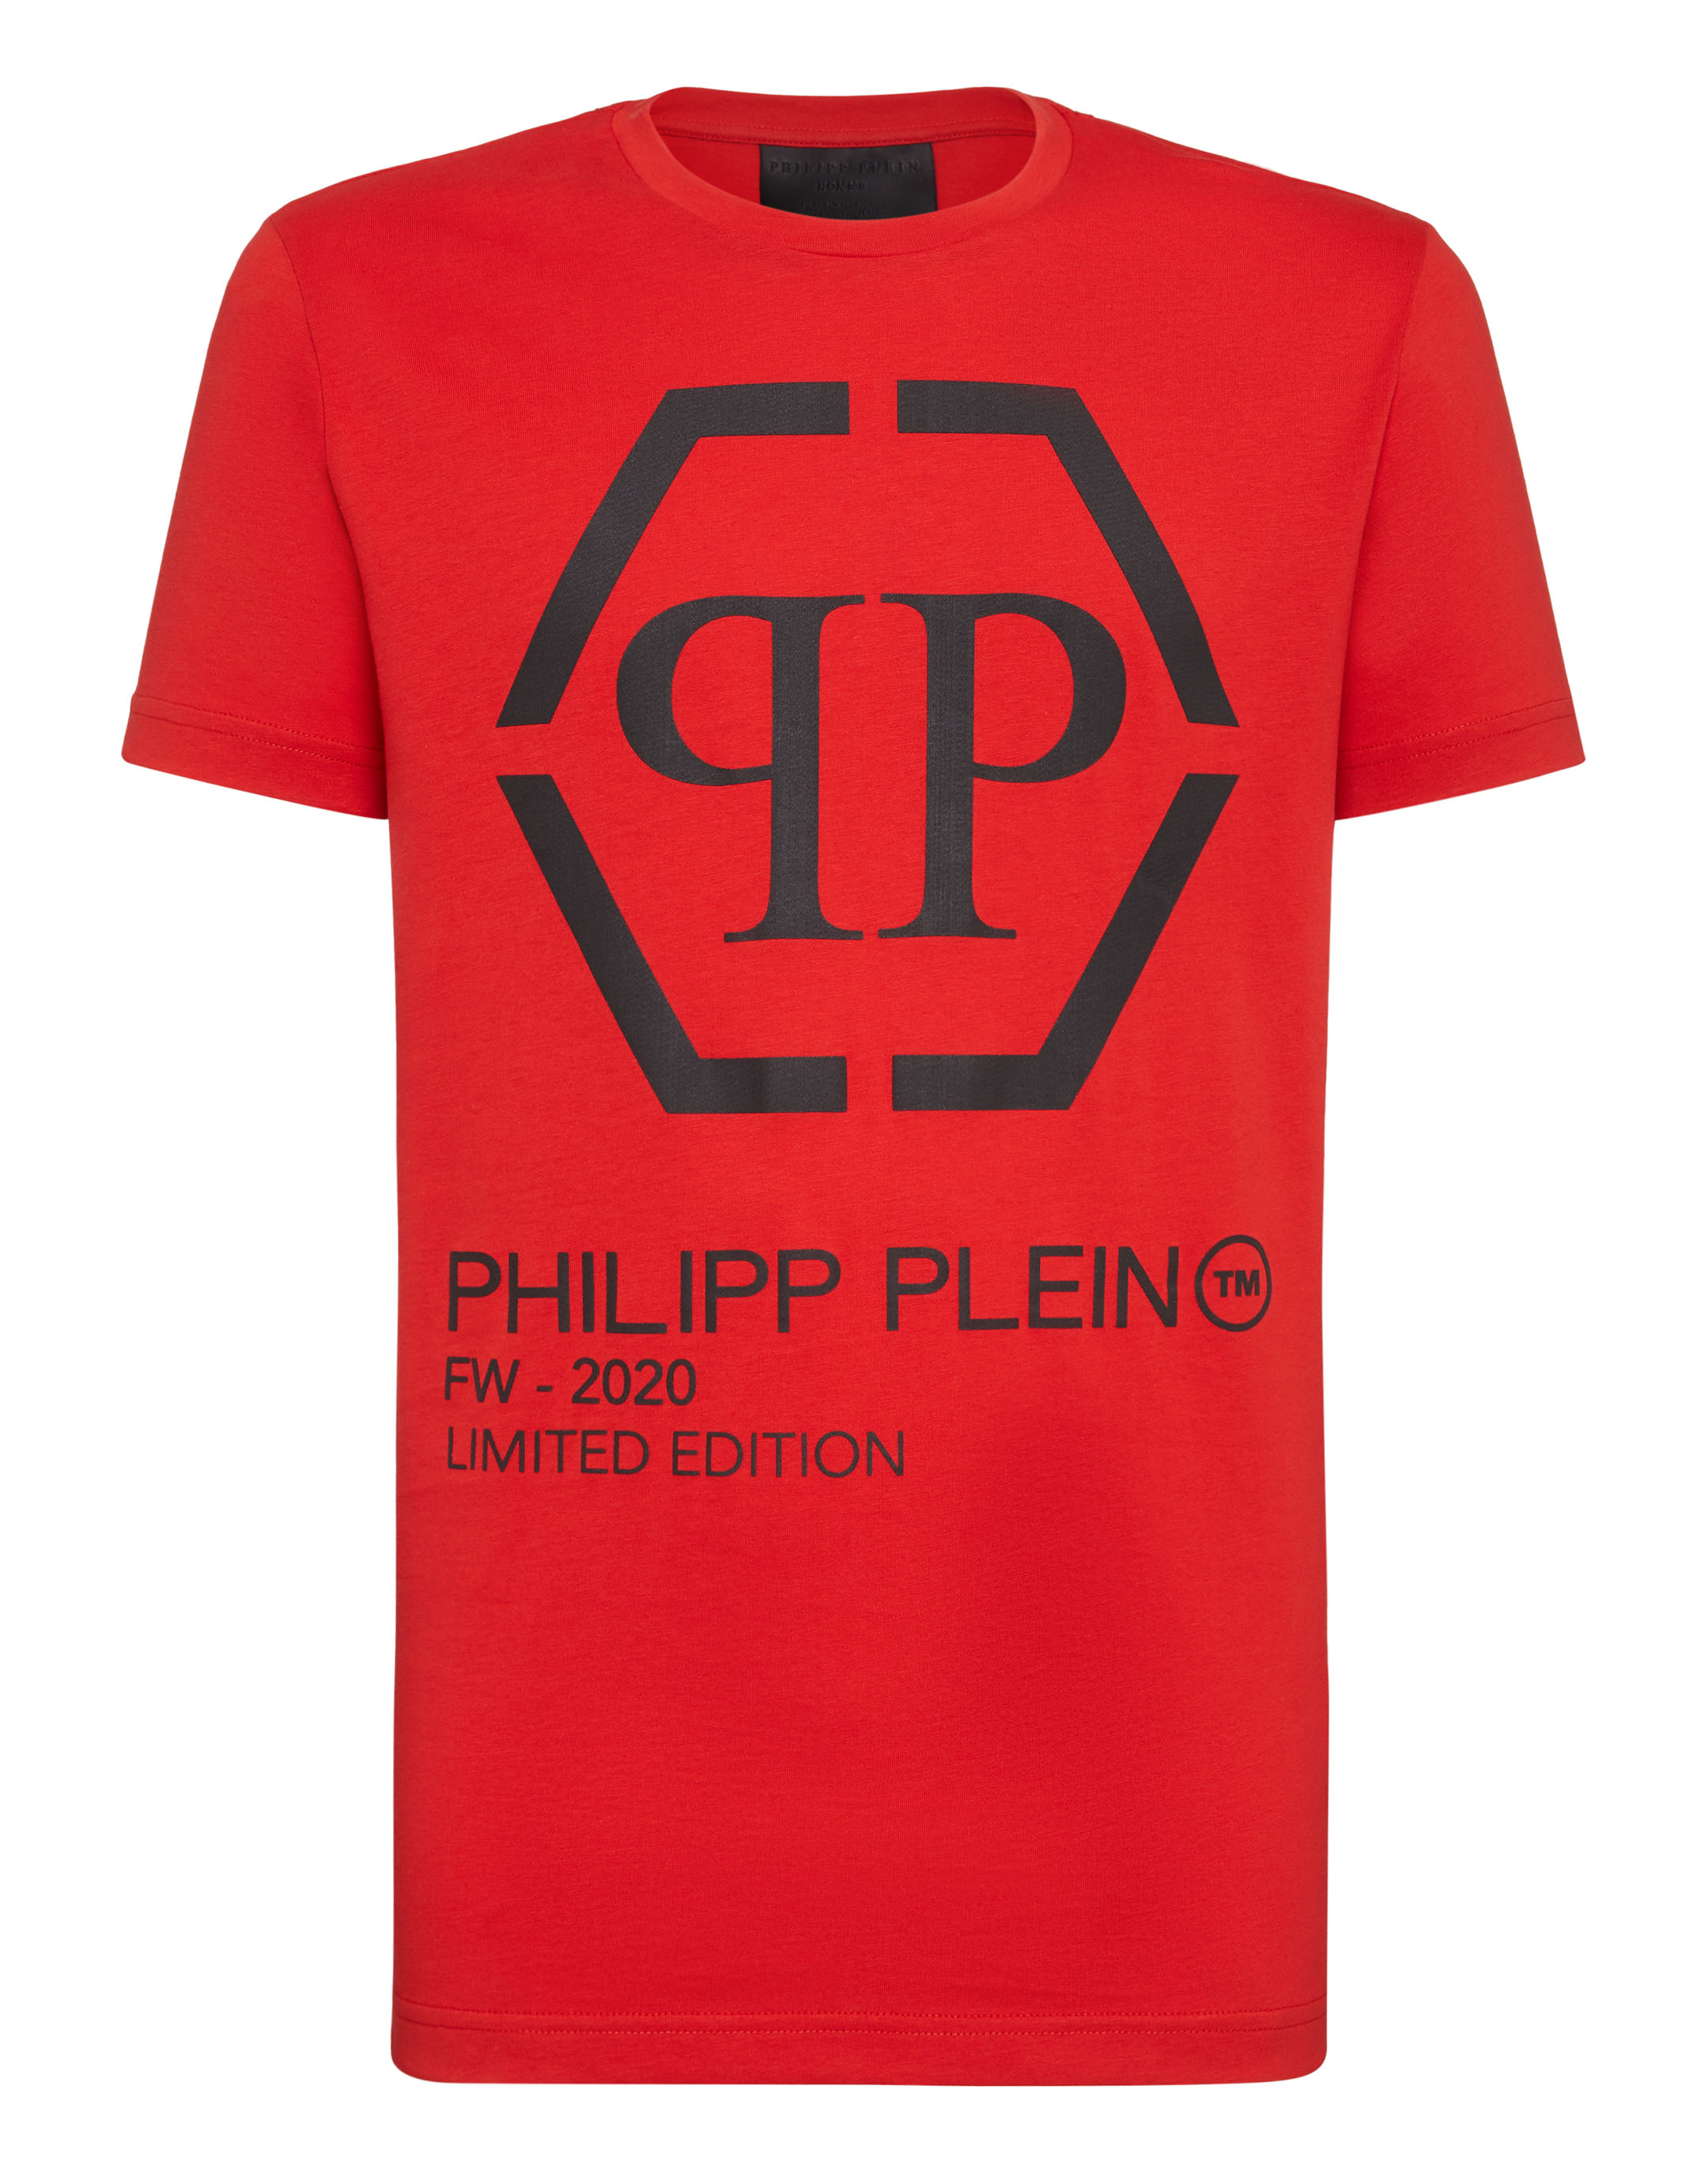 philipp plein t shirt gold